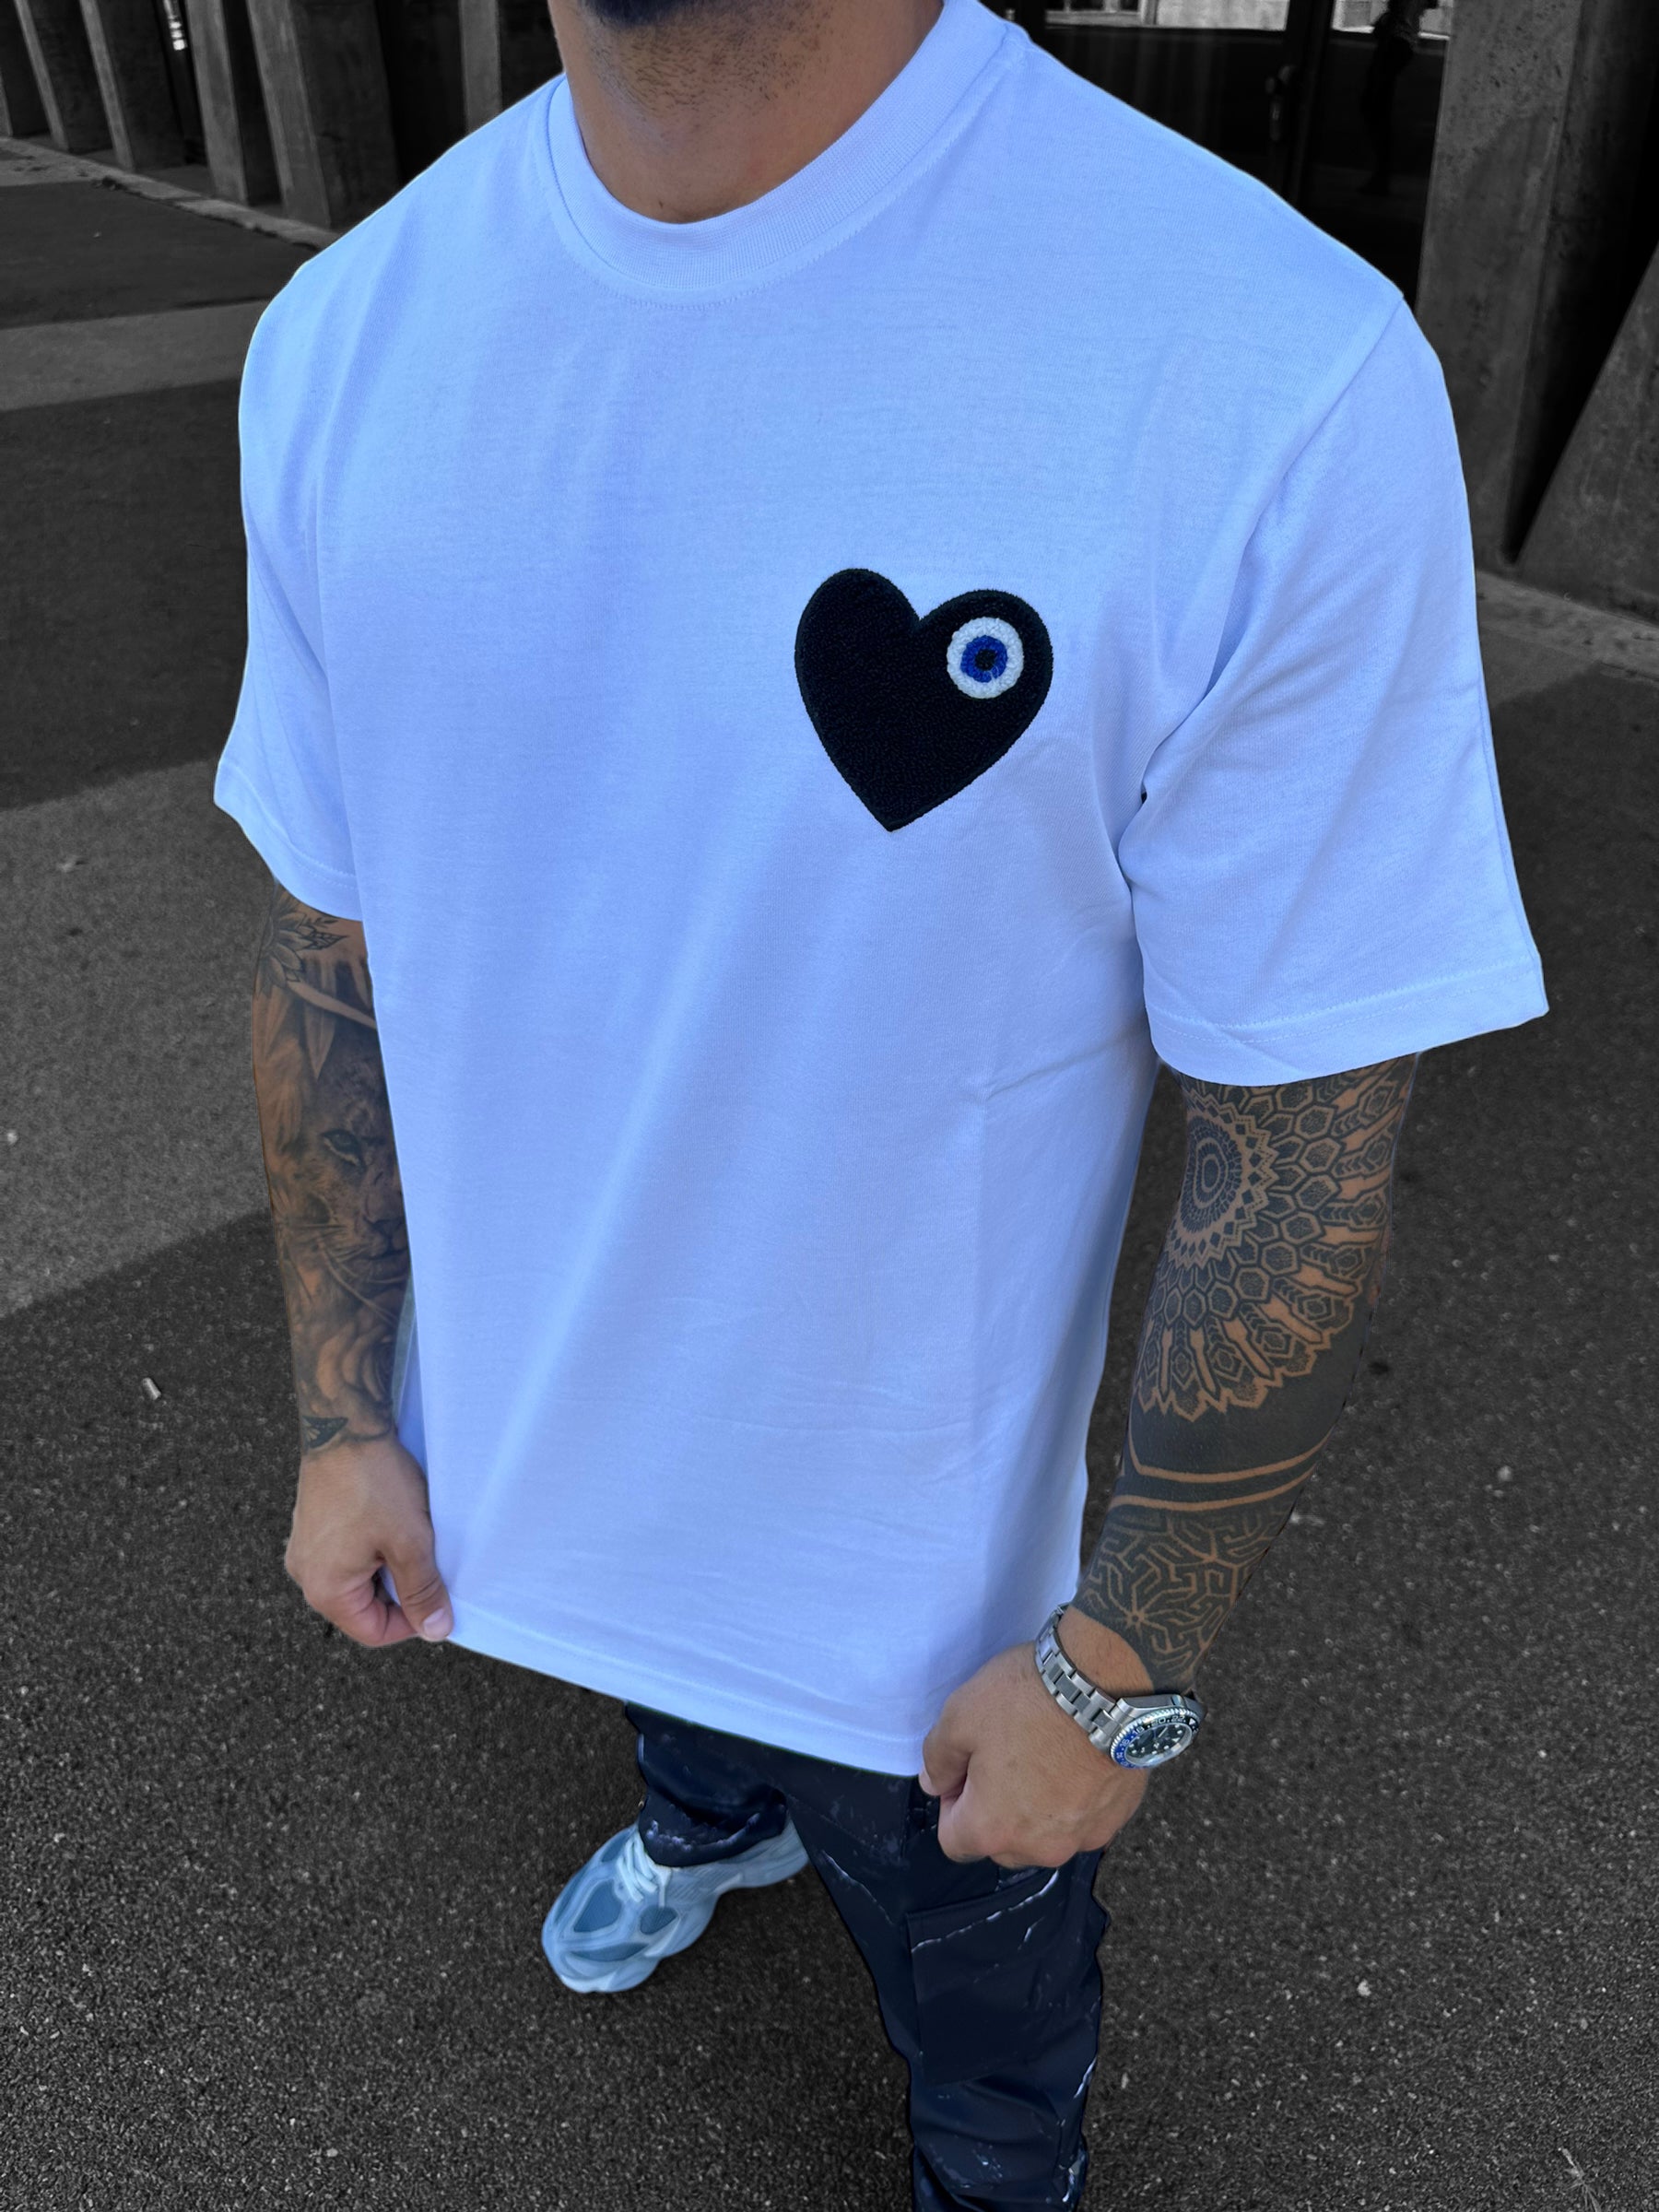 ADJ - T-shirt blanc coeur Noir